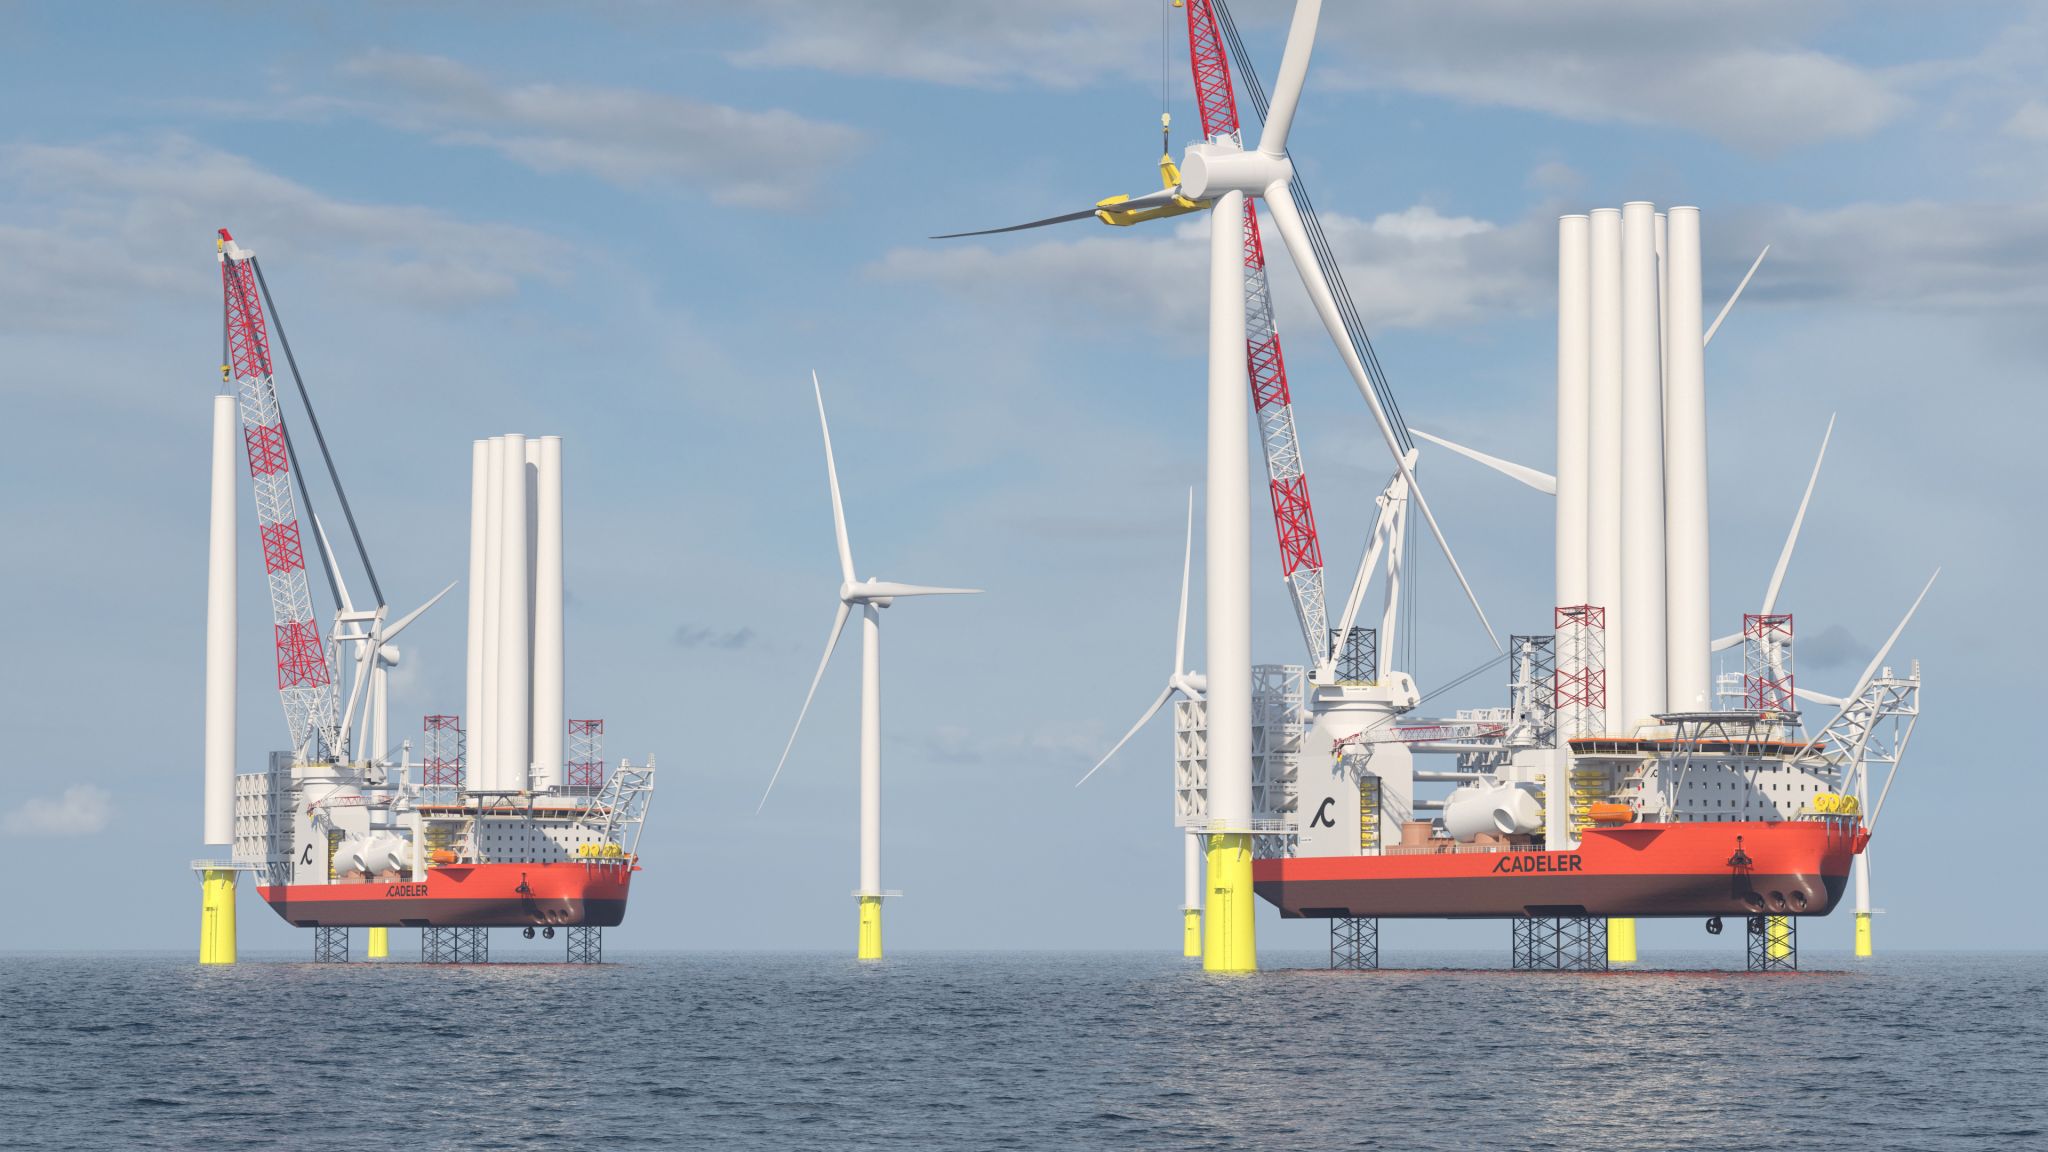 Cadeler inks deal for offshore wind farm in Poland